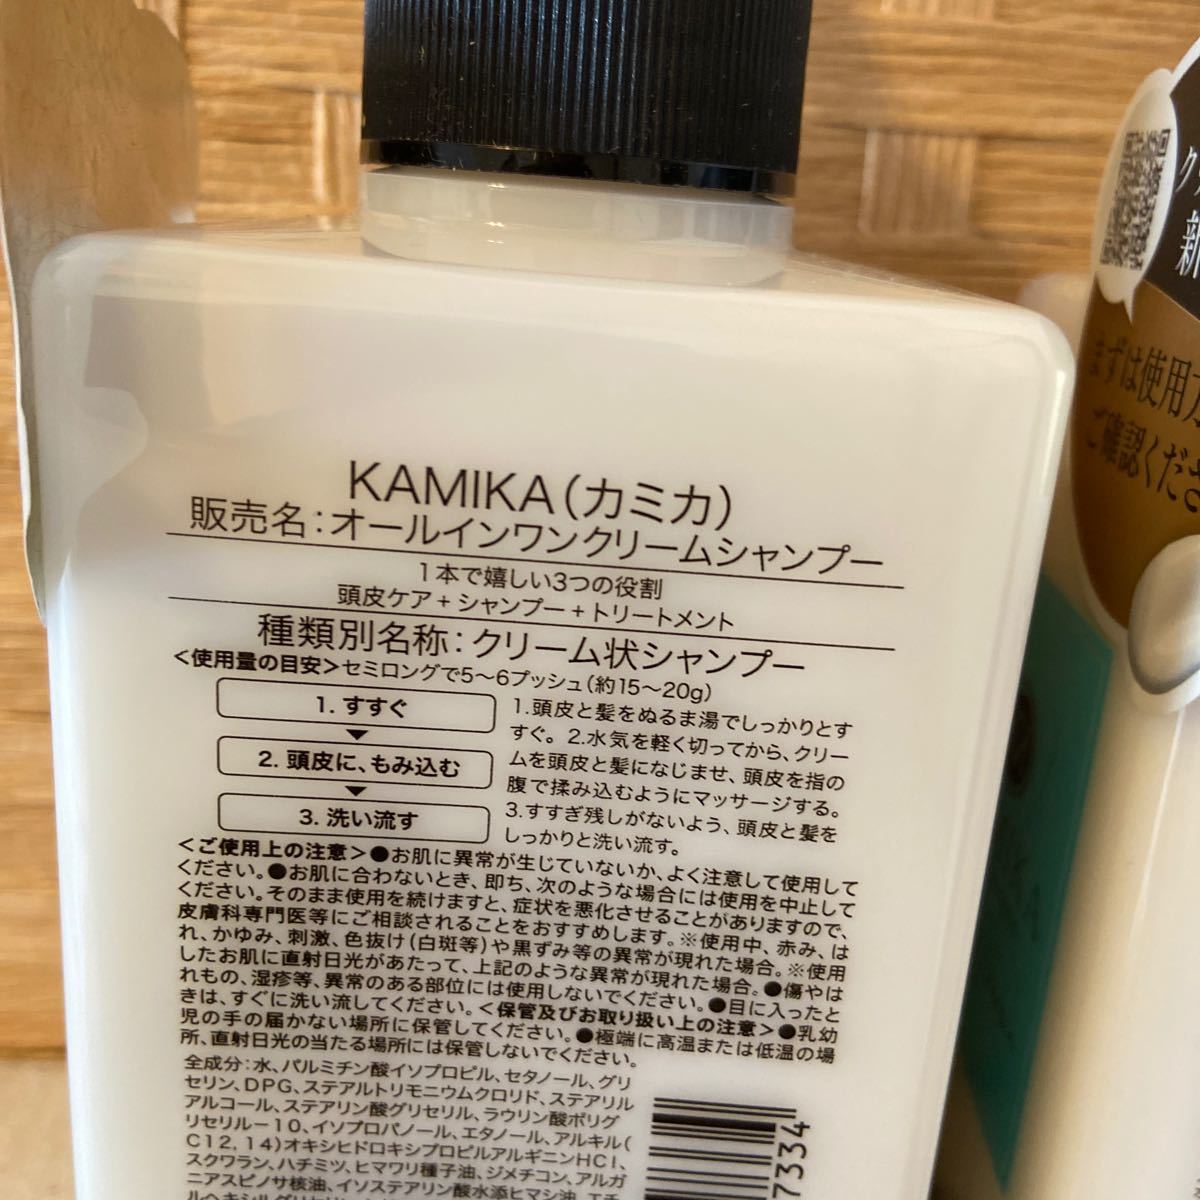 www.haoming.jp - ◇カミカ クリームシャンプー 600g KAMIKA ◇ 価格比較